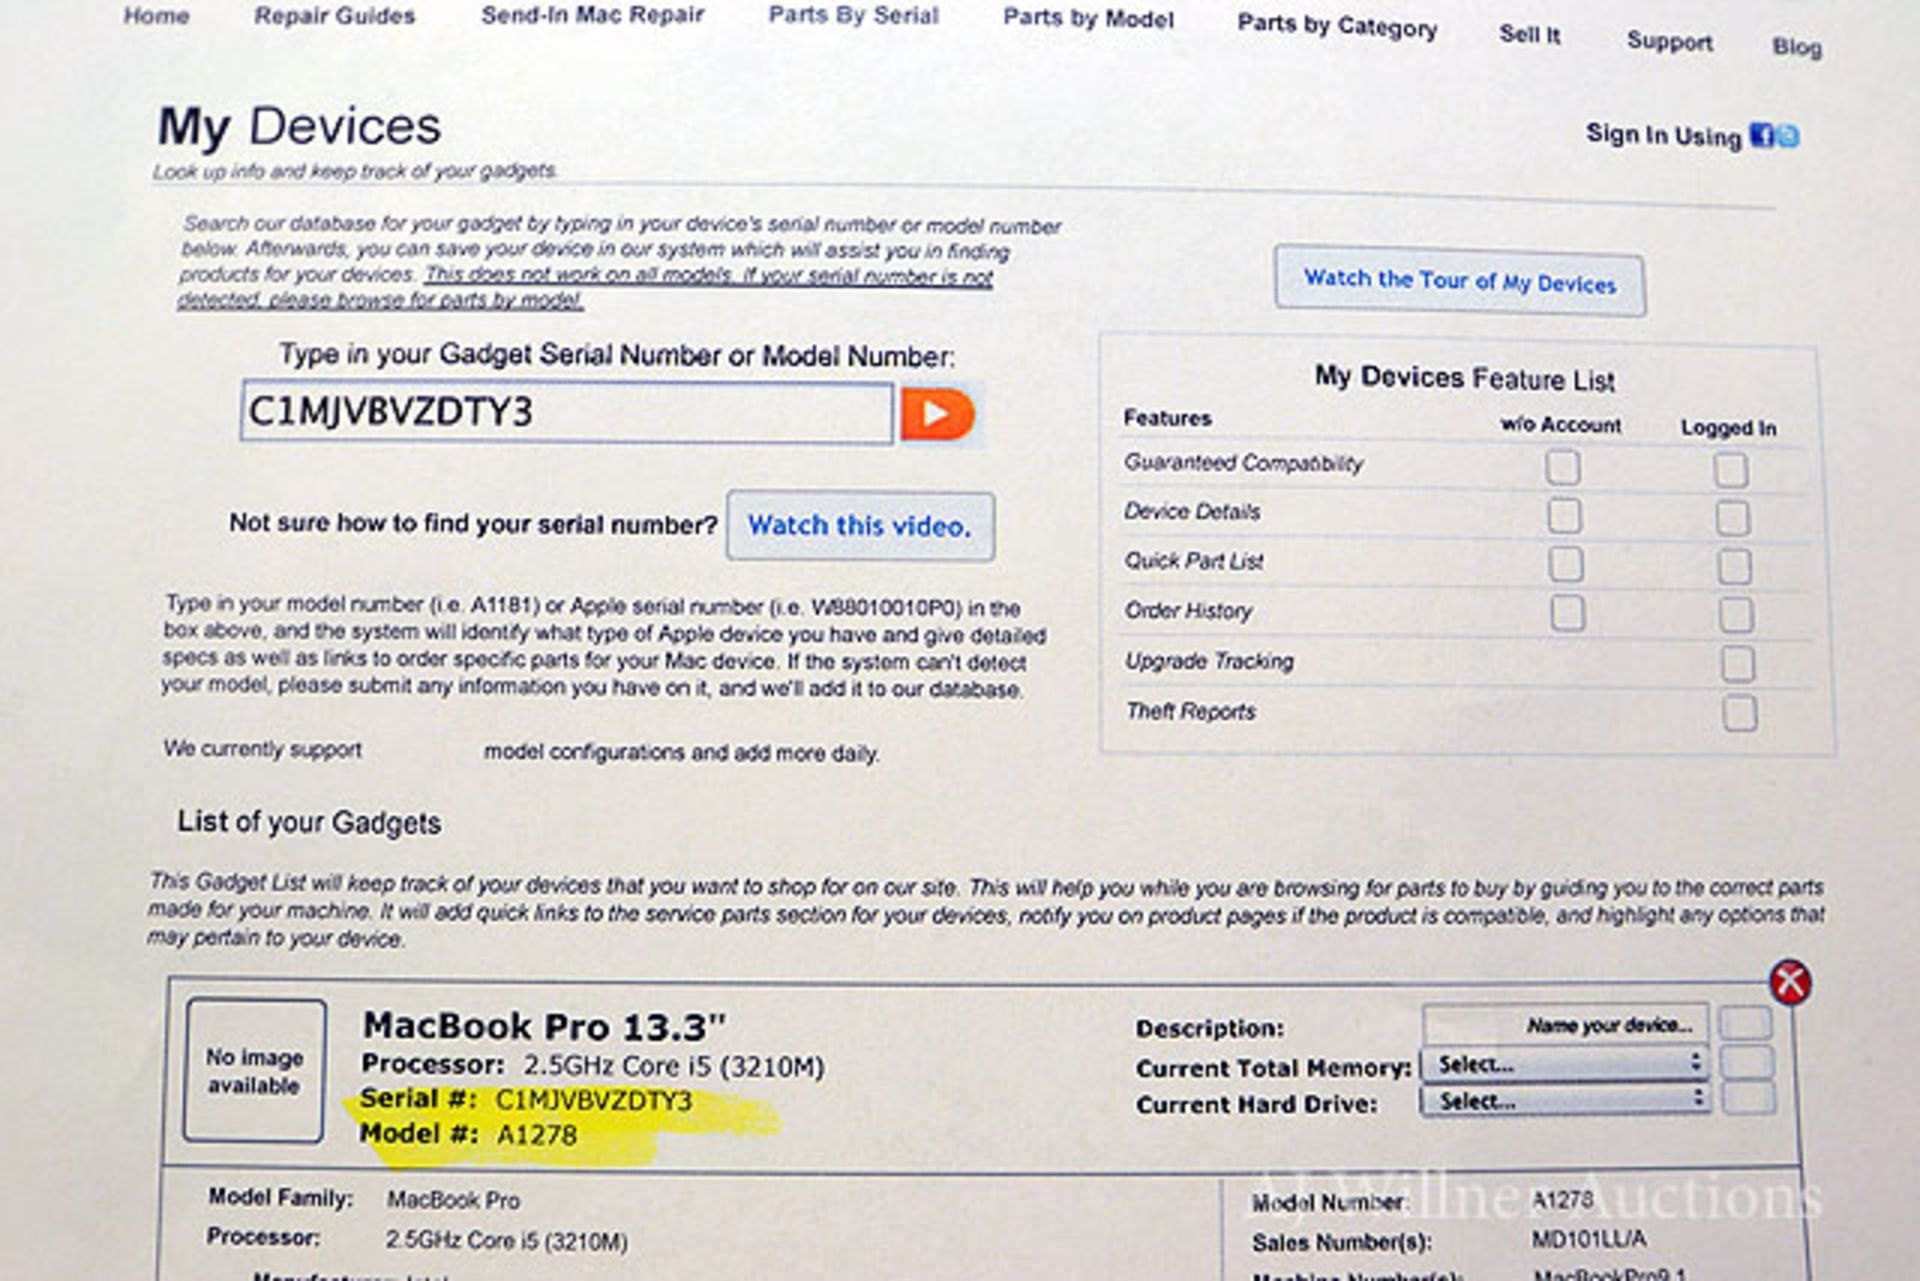 MacBook Pro 13.3” Model A1278, 2.5 GHz Core i5 (3210M), 500 GB - Image 2 of 2